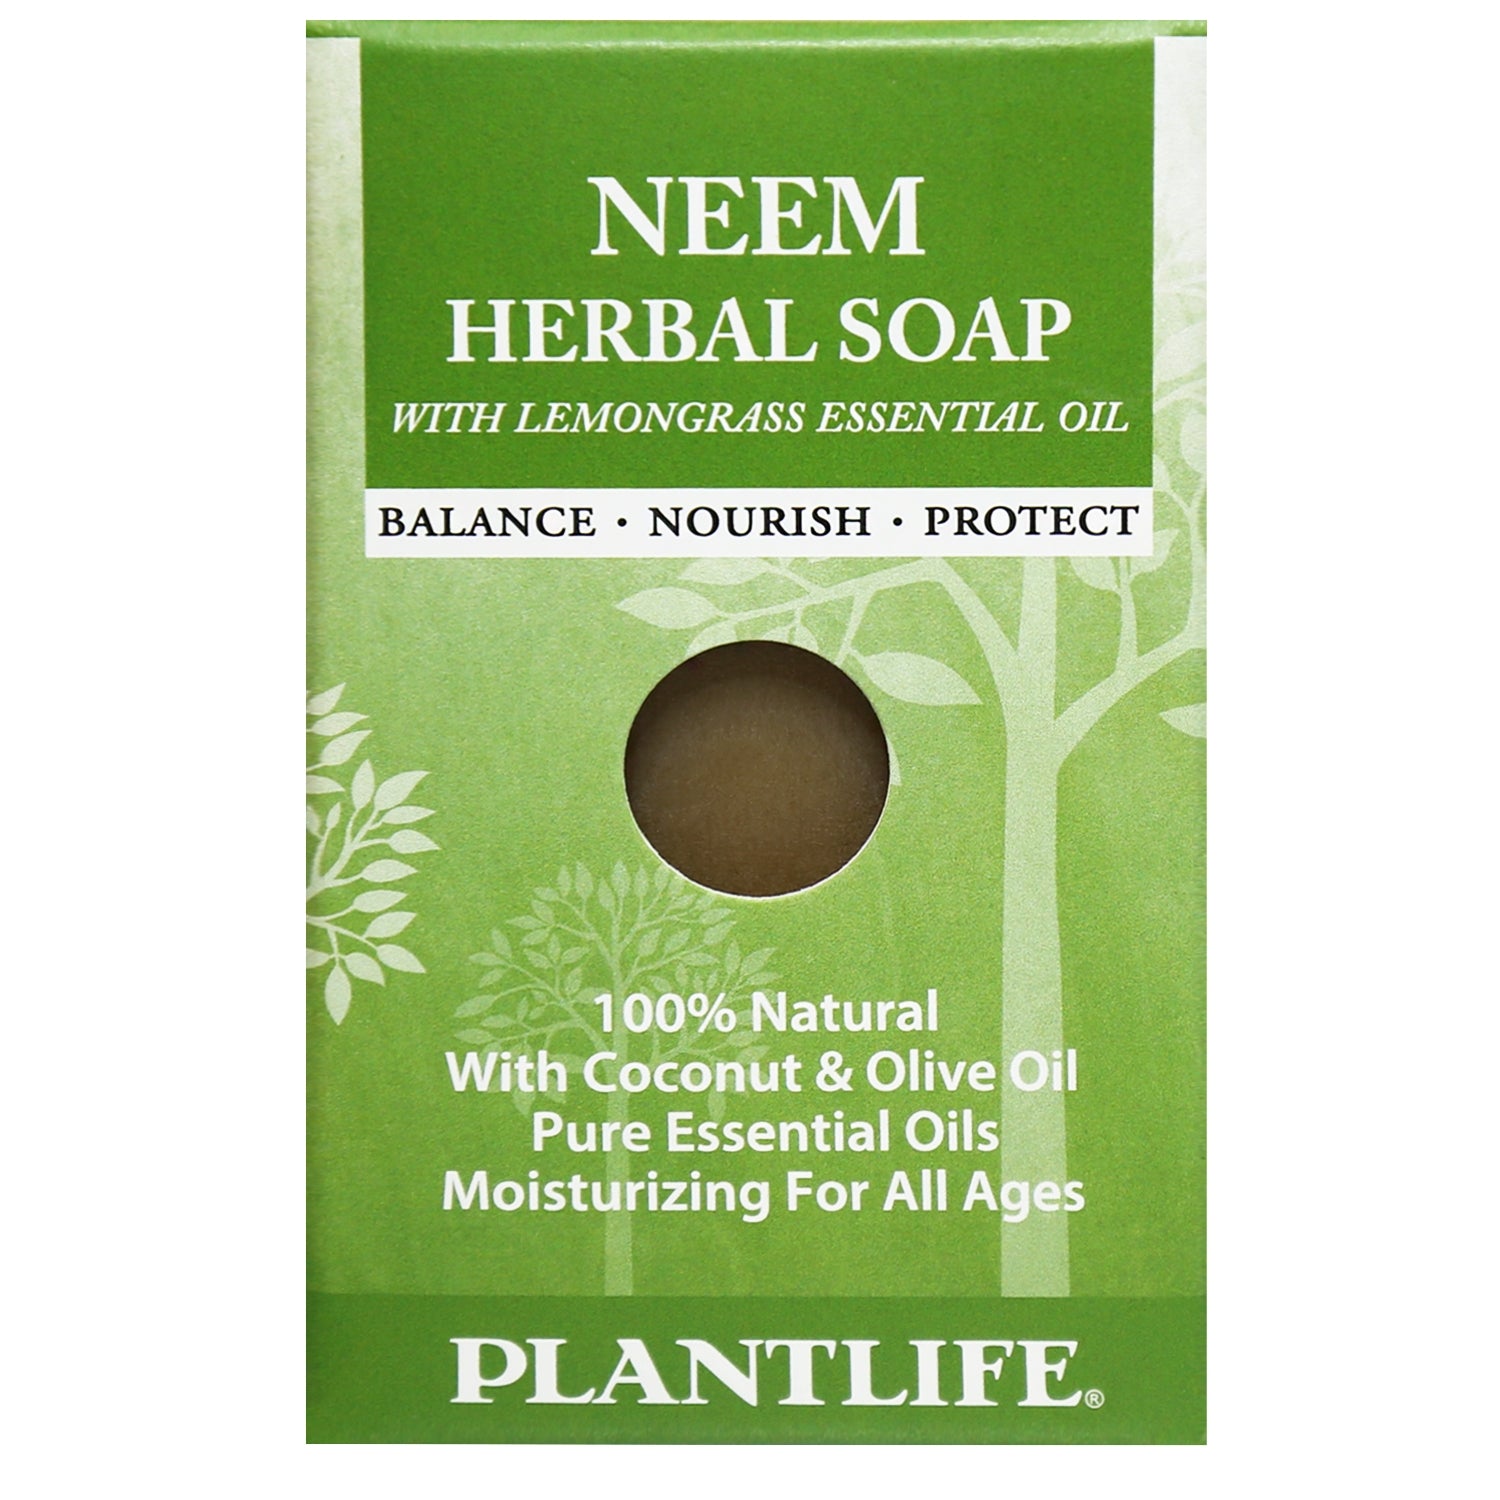 Neem Herbal Soap Sample